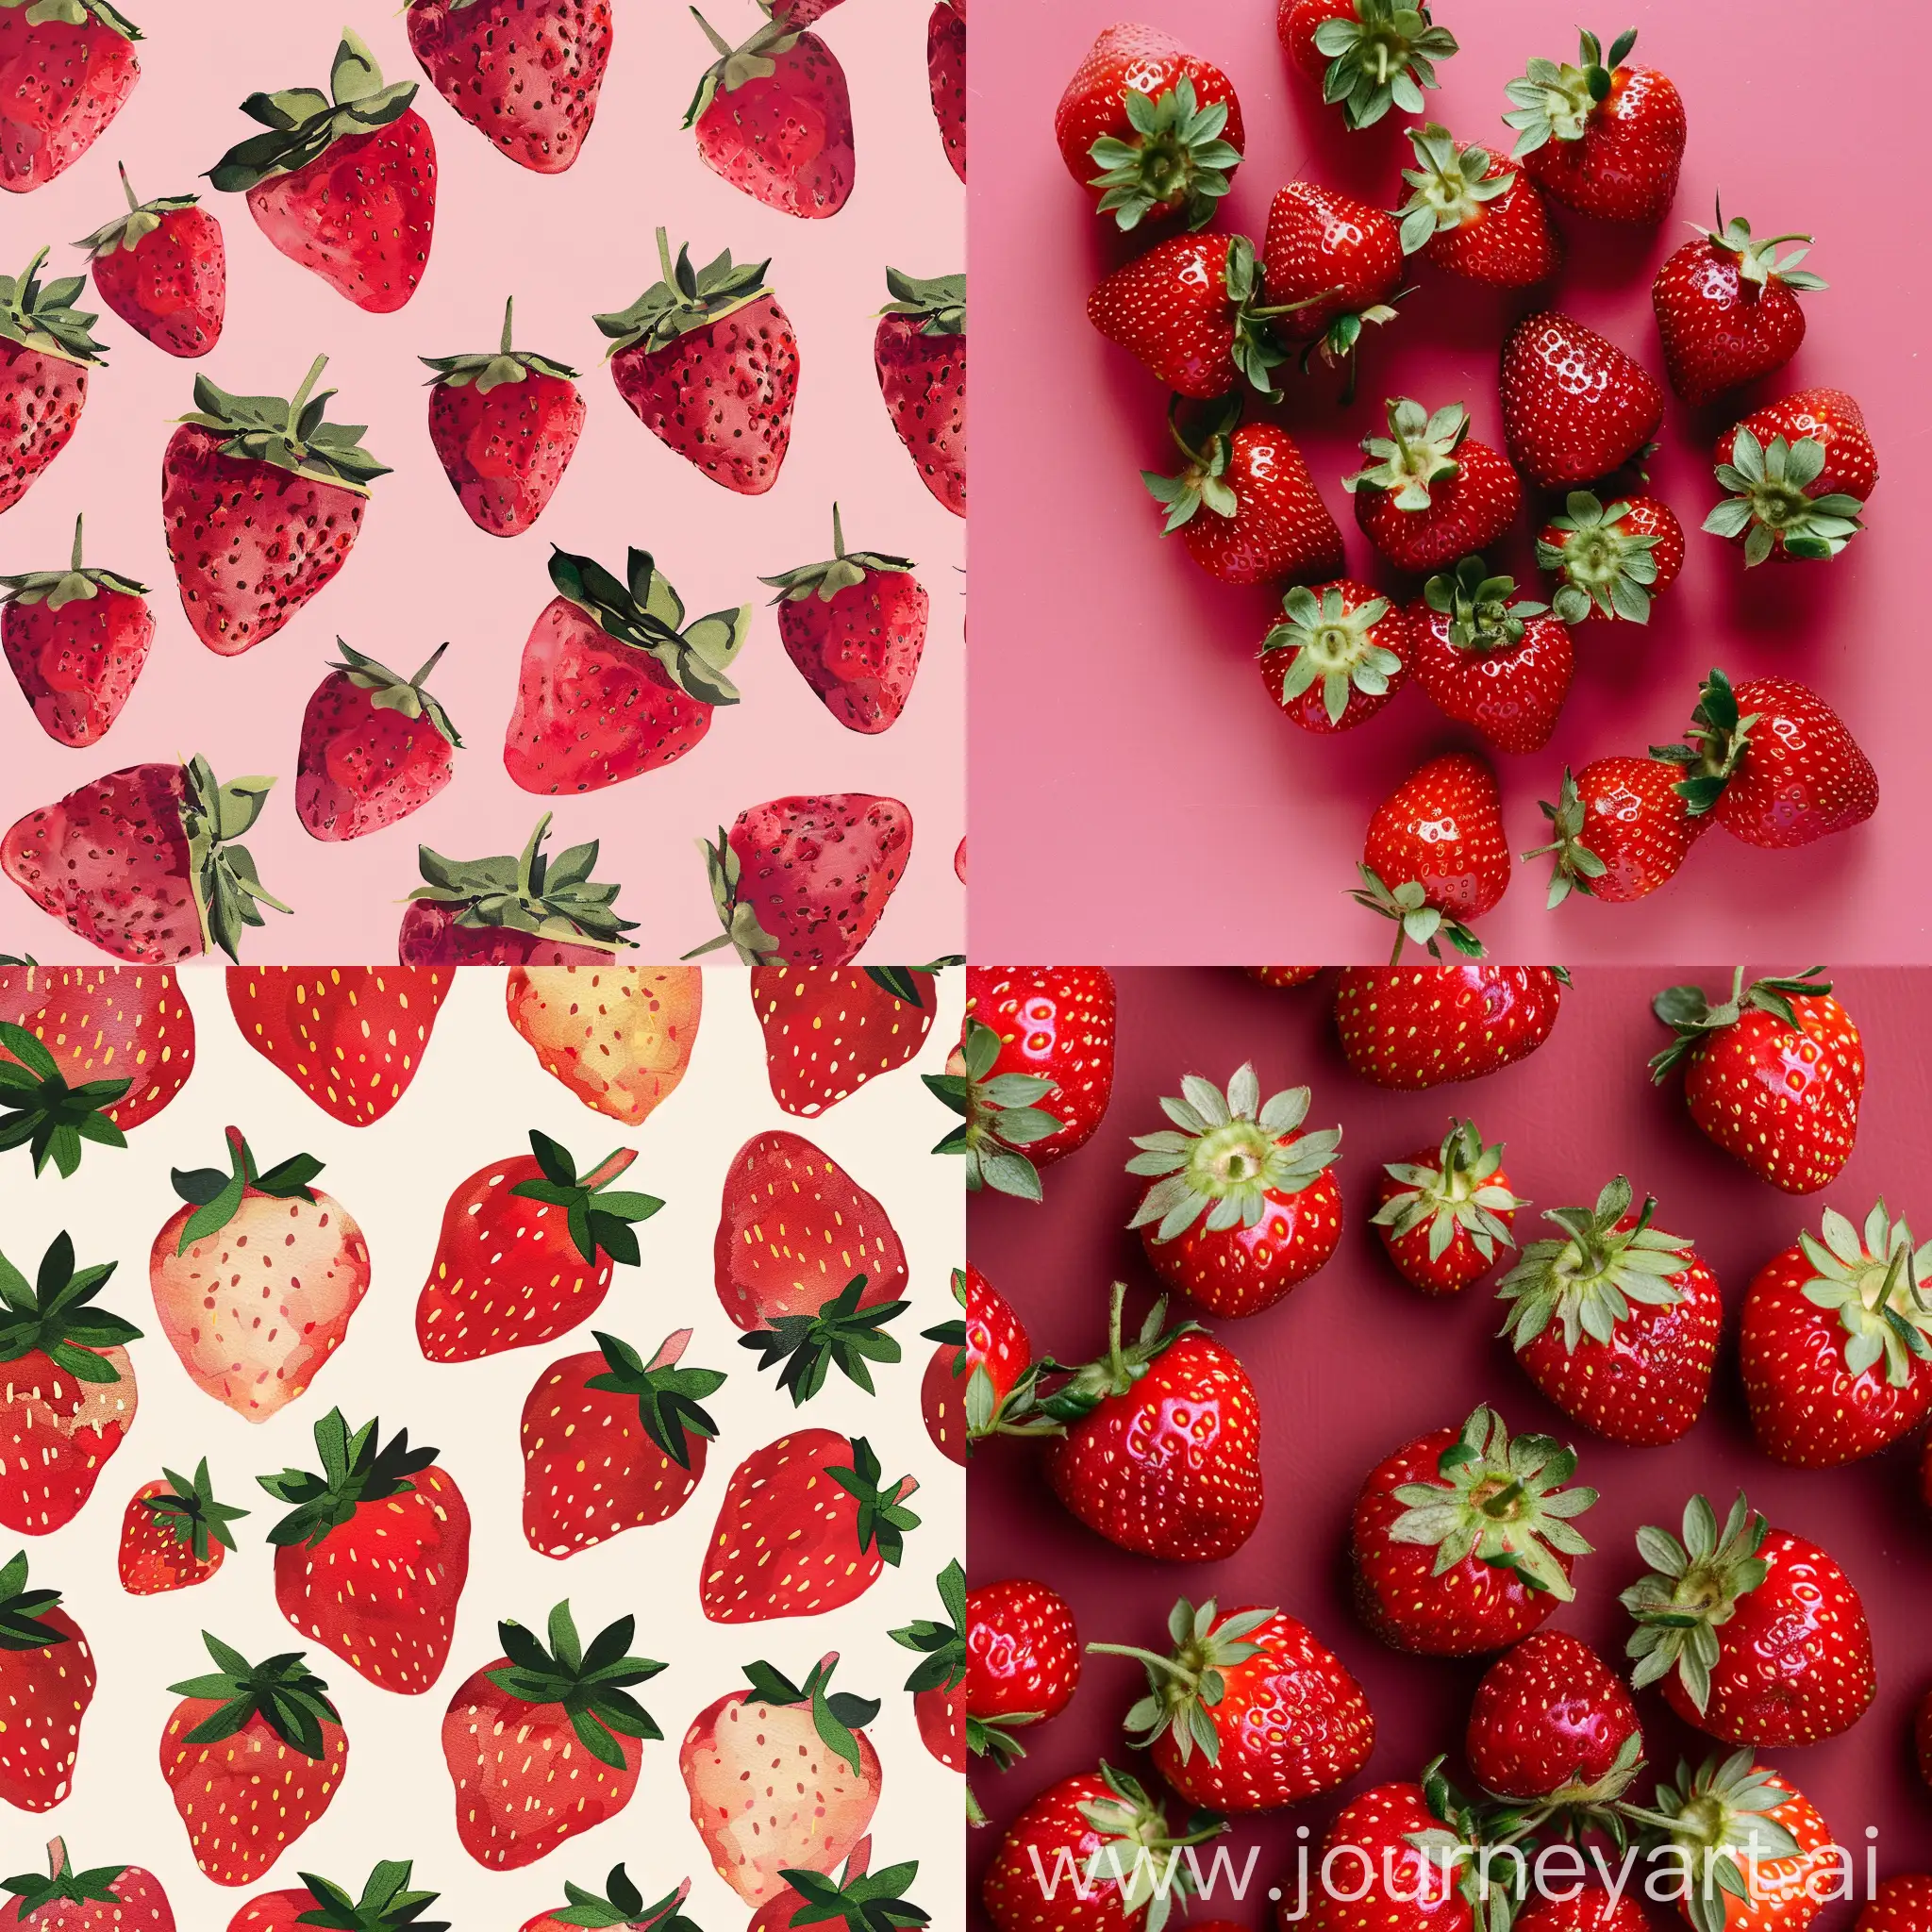 Strawberry-Aesthetic-Fashionable-Wallpaper